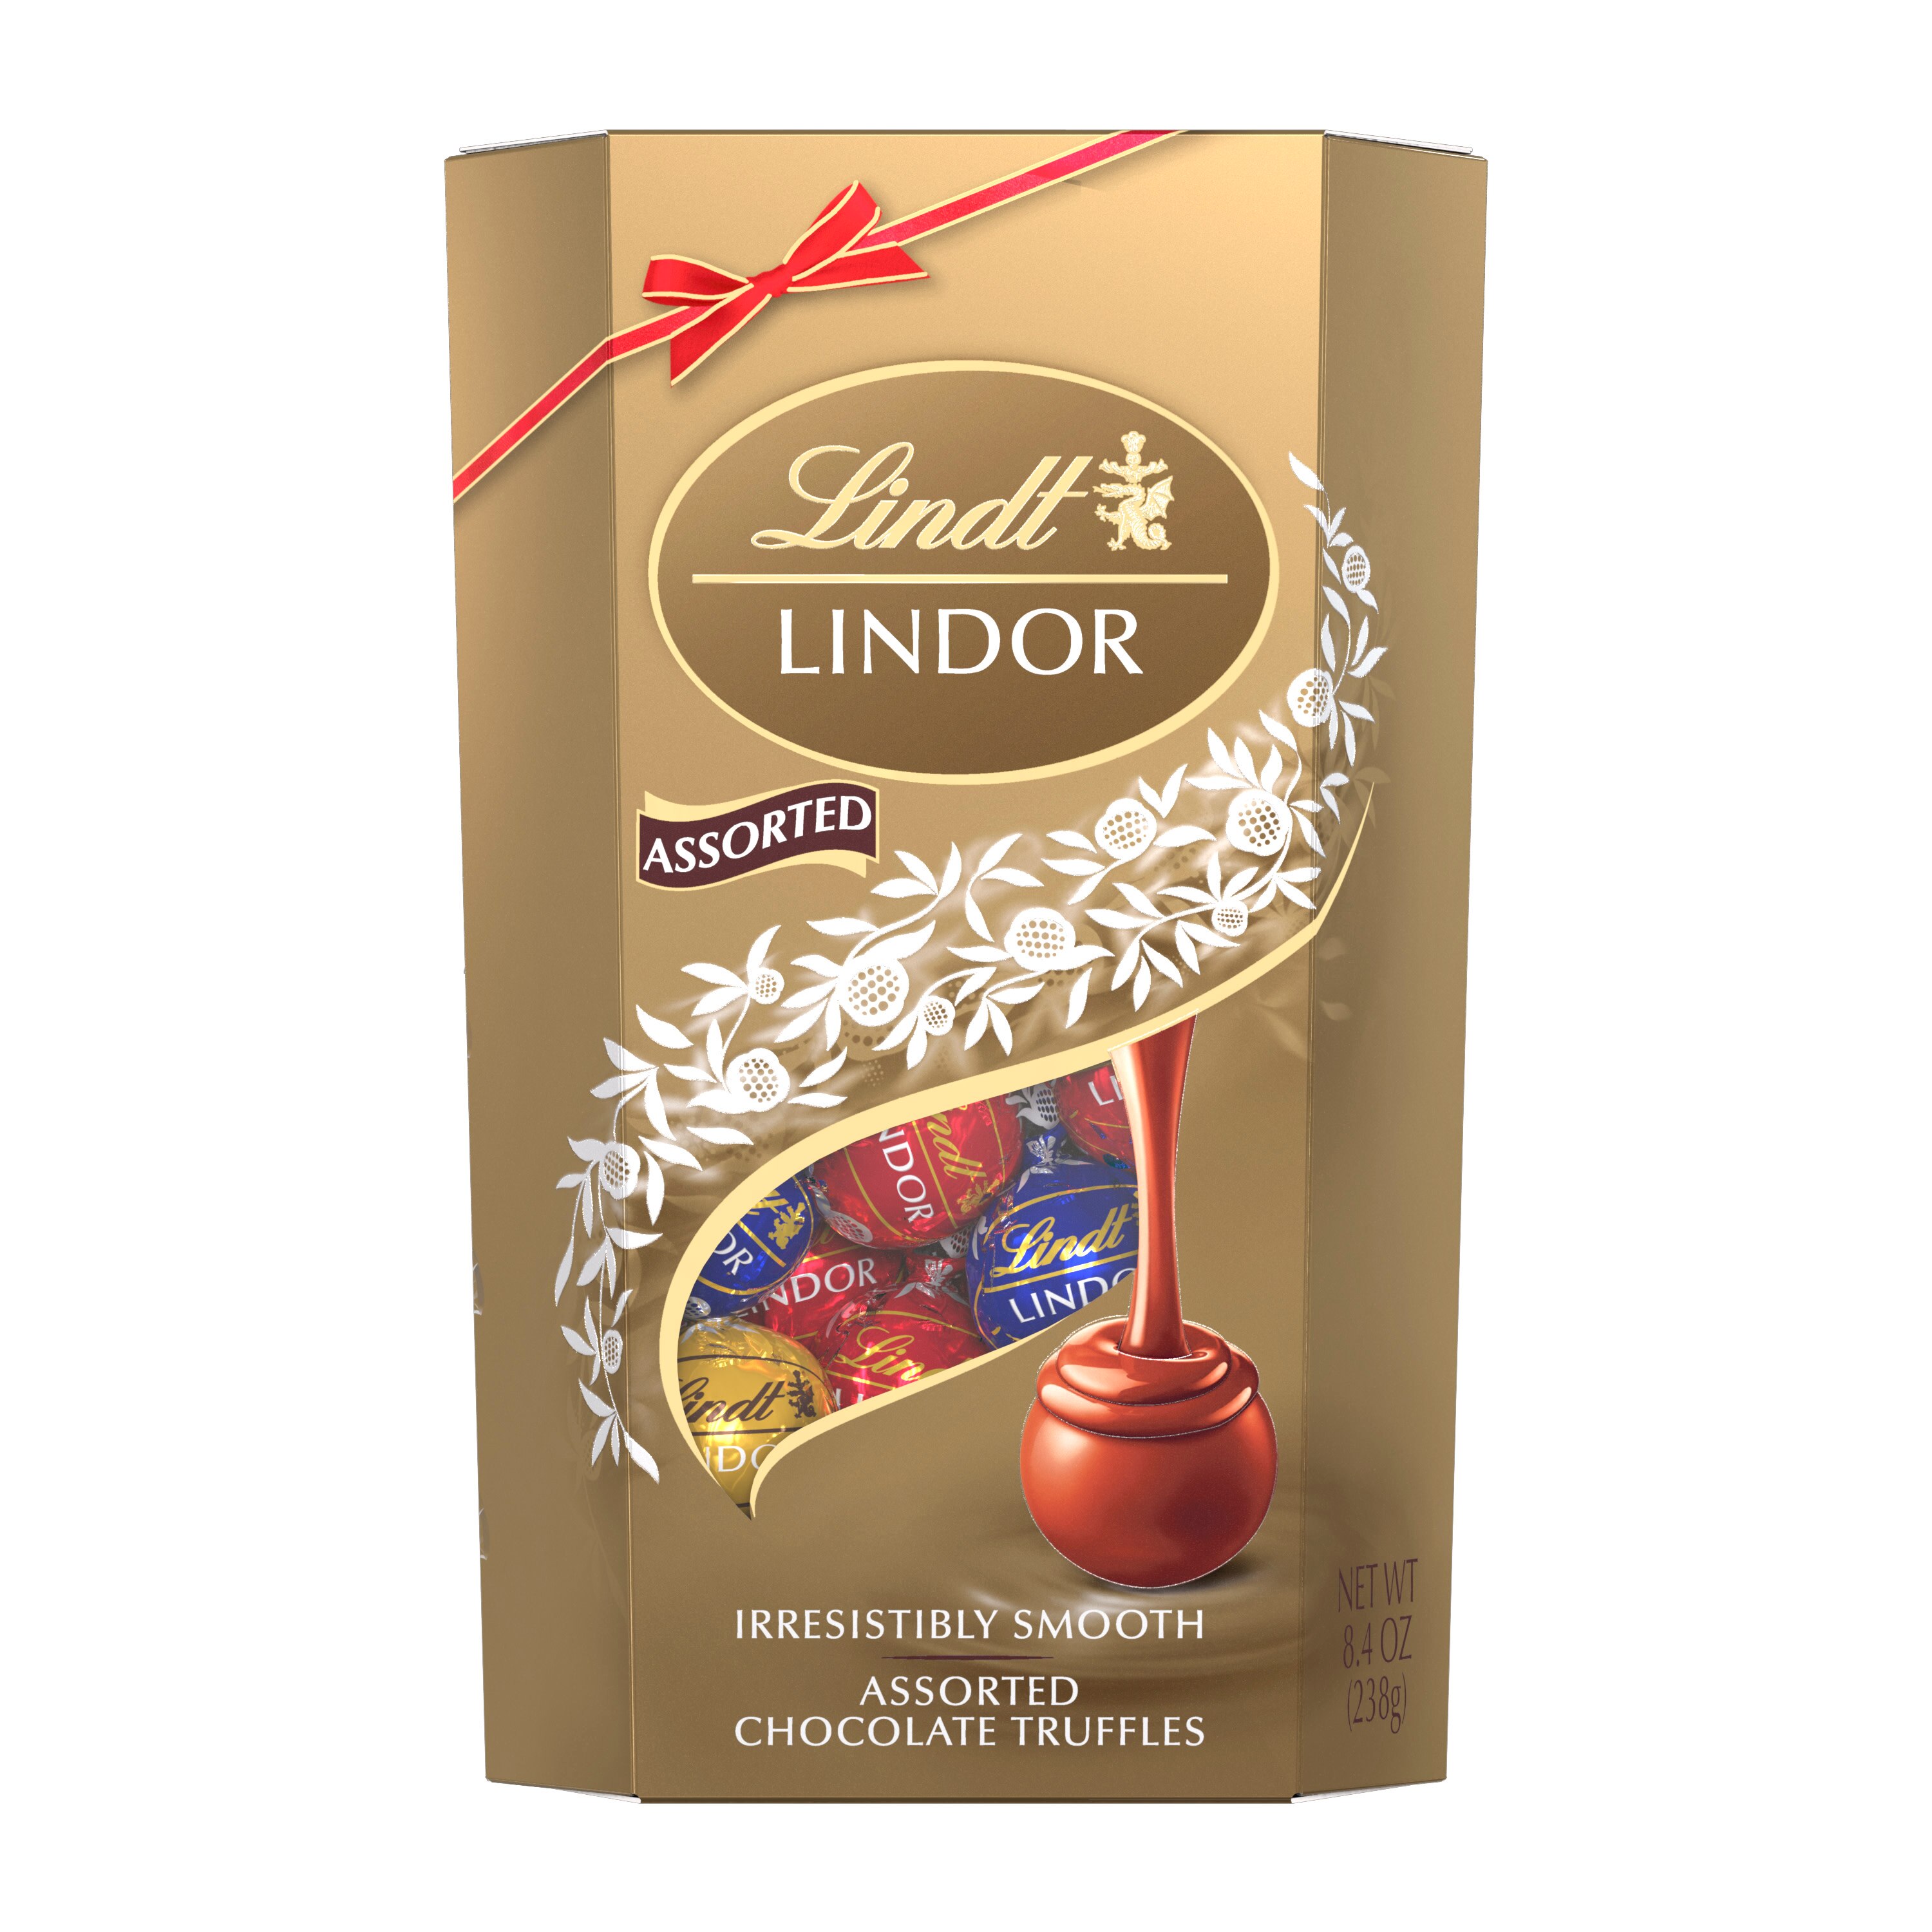 Lindt Lindor Assorted Chocolate Candy Truffles Gift Box, 8.4 oz | CVS